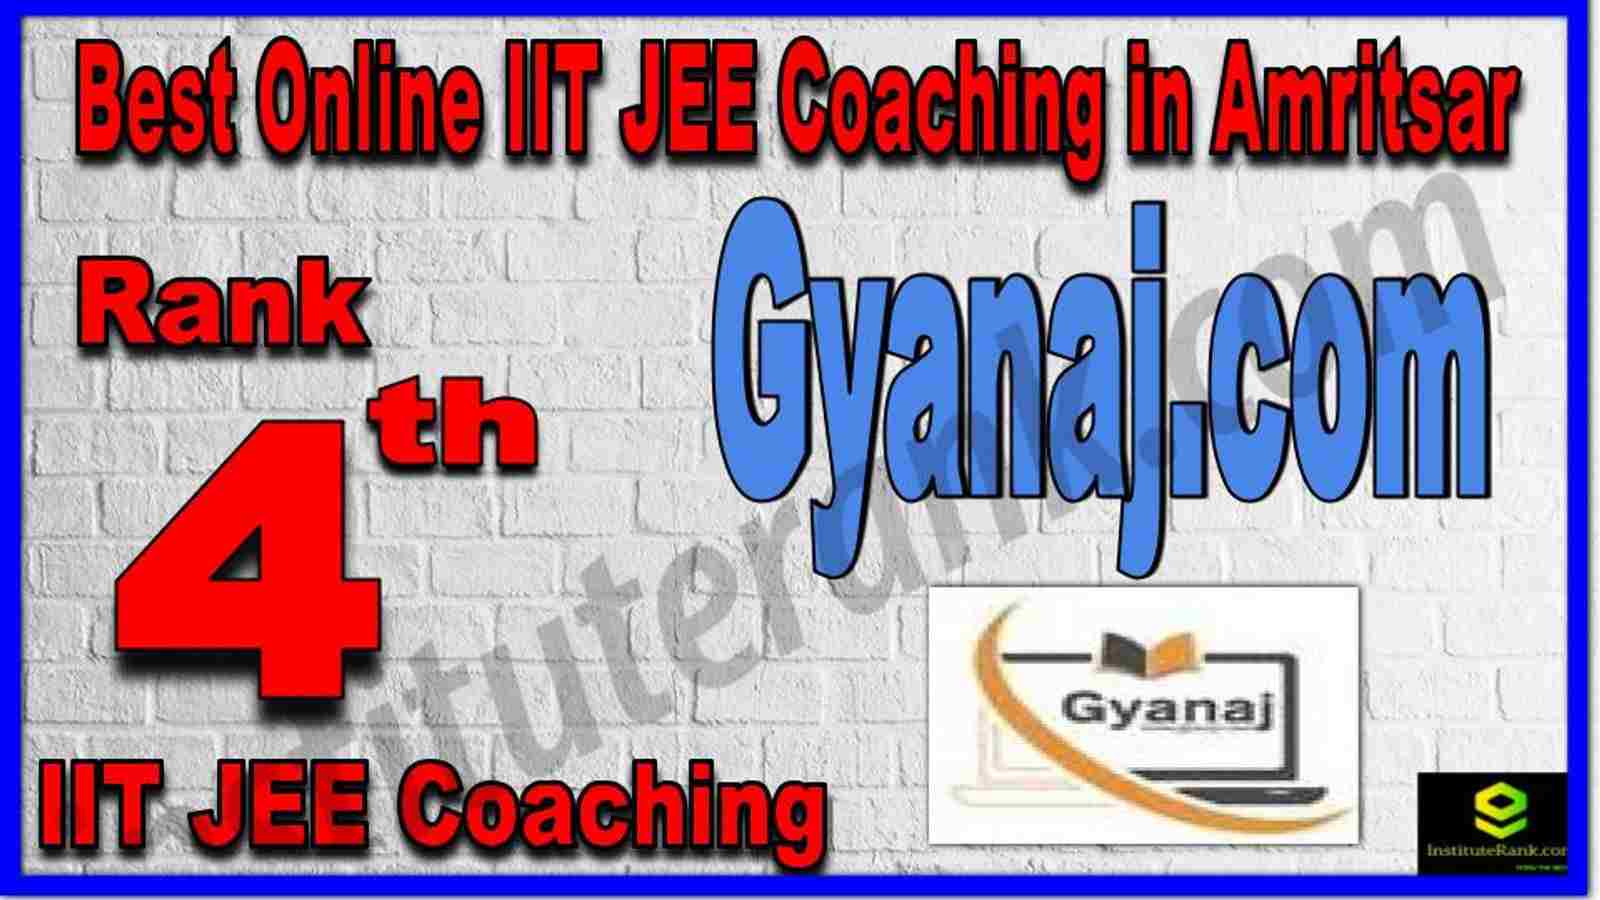 Rank 4th Best Online IIT JEE Coaching in Amritsar